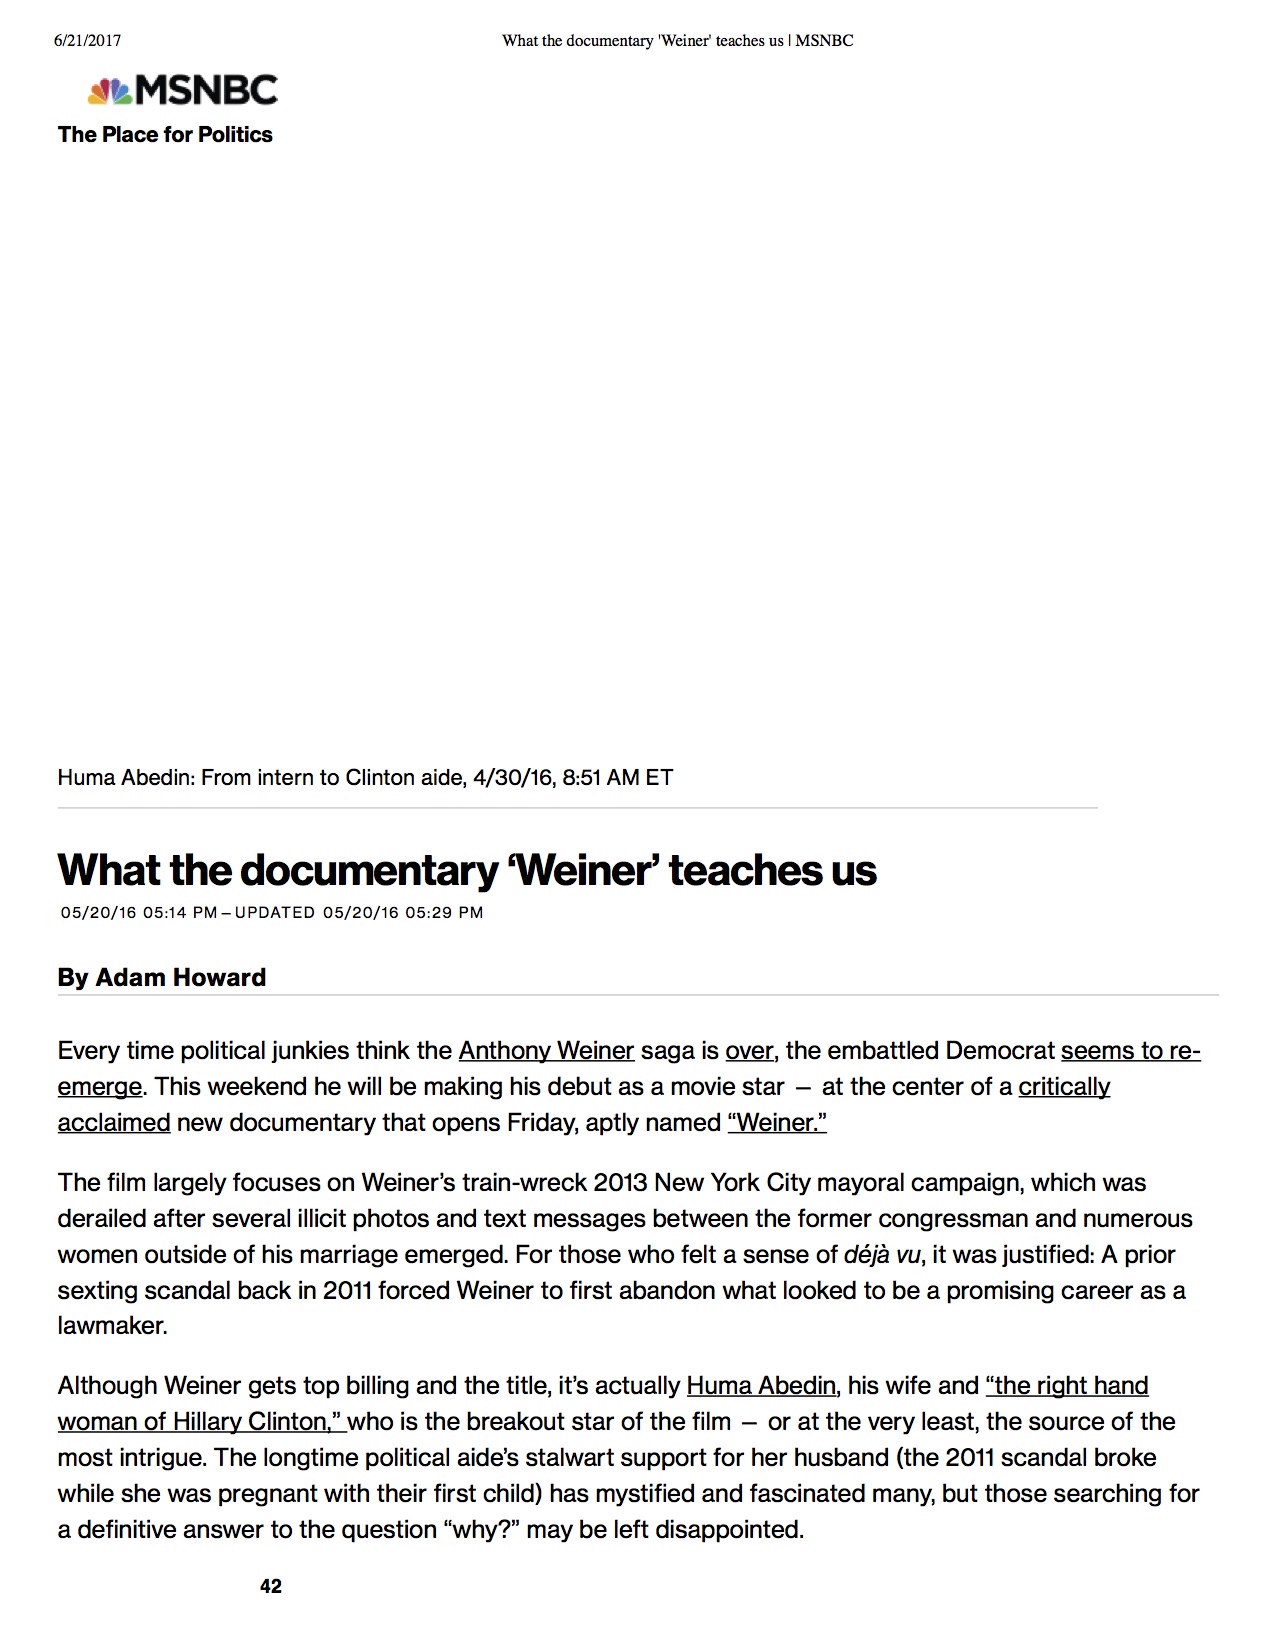 1What the documentary 'Weiner' teaches us _ MSNBC.jpg